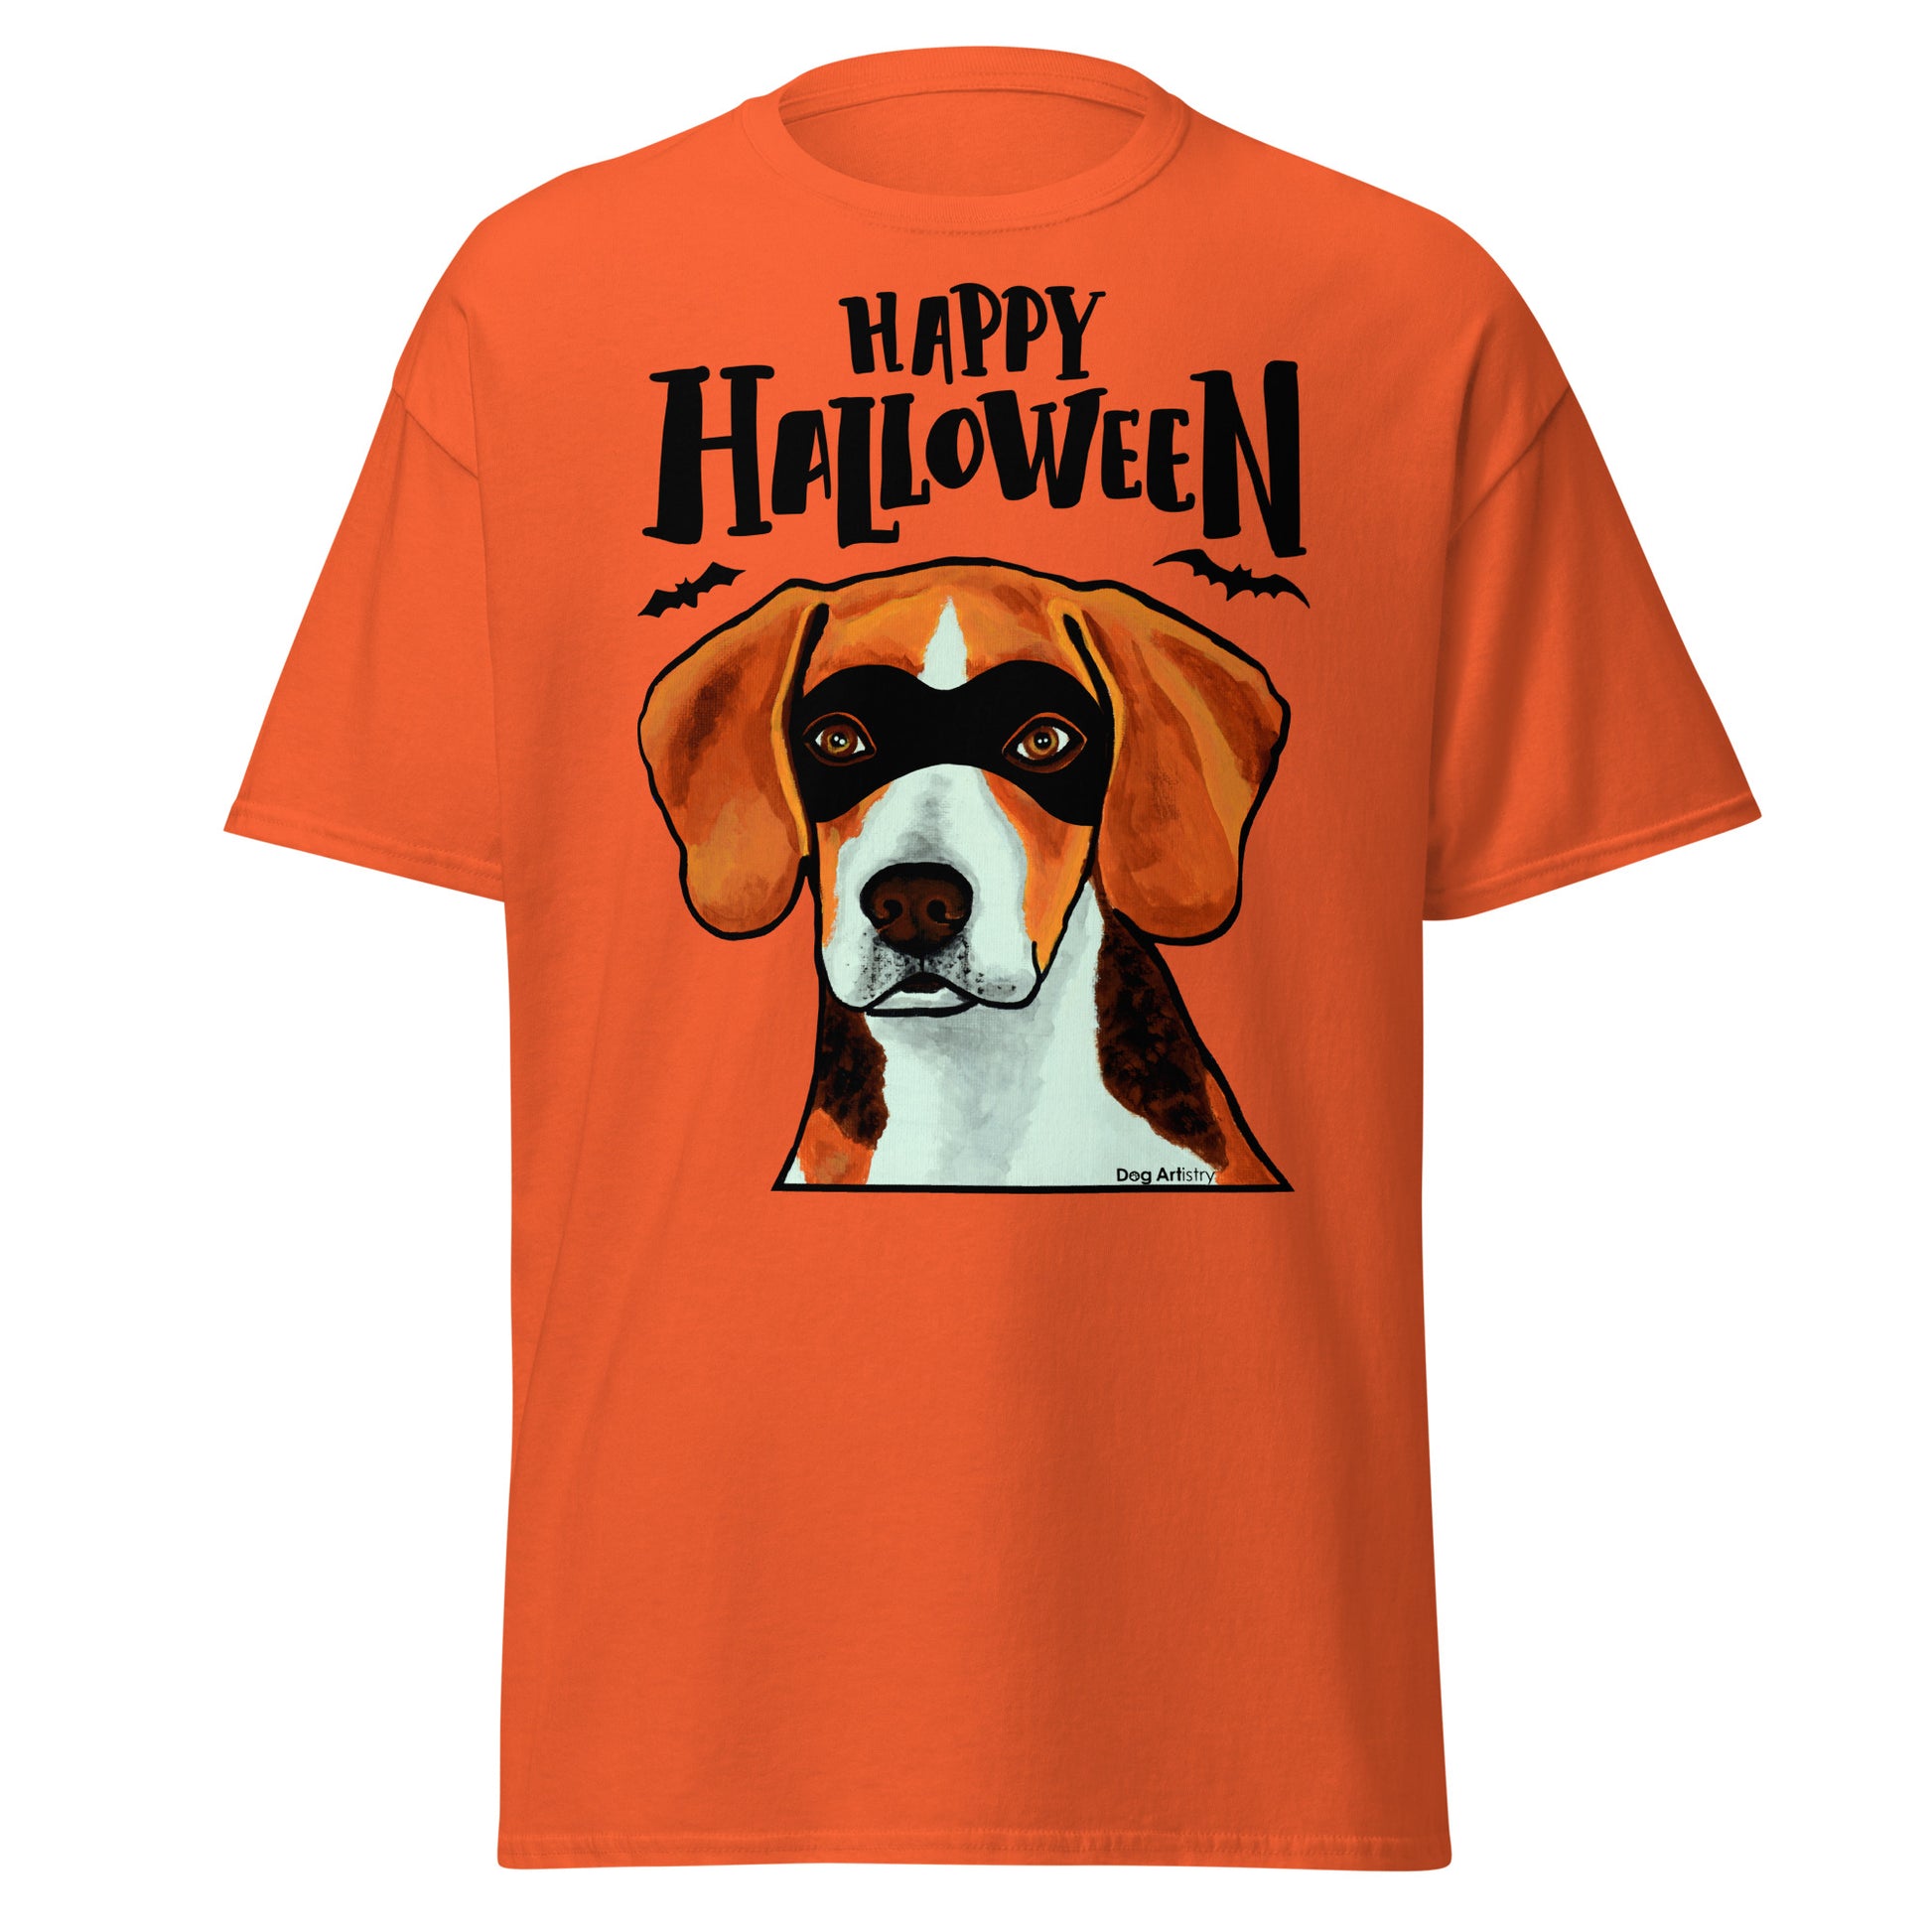 Funny Happy Halloween Beagle wearing mask men’s orange t-shirt by Dog Artistry.